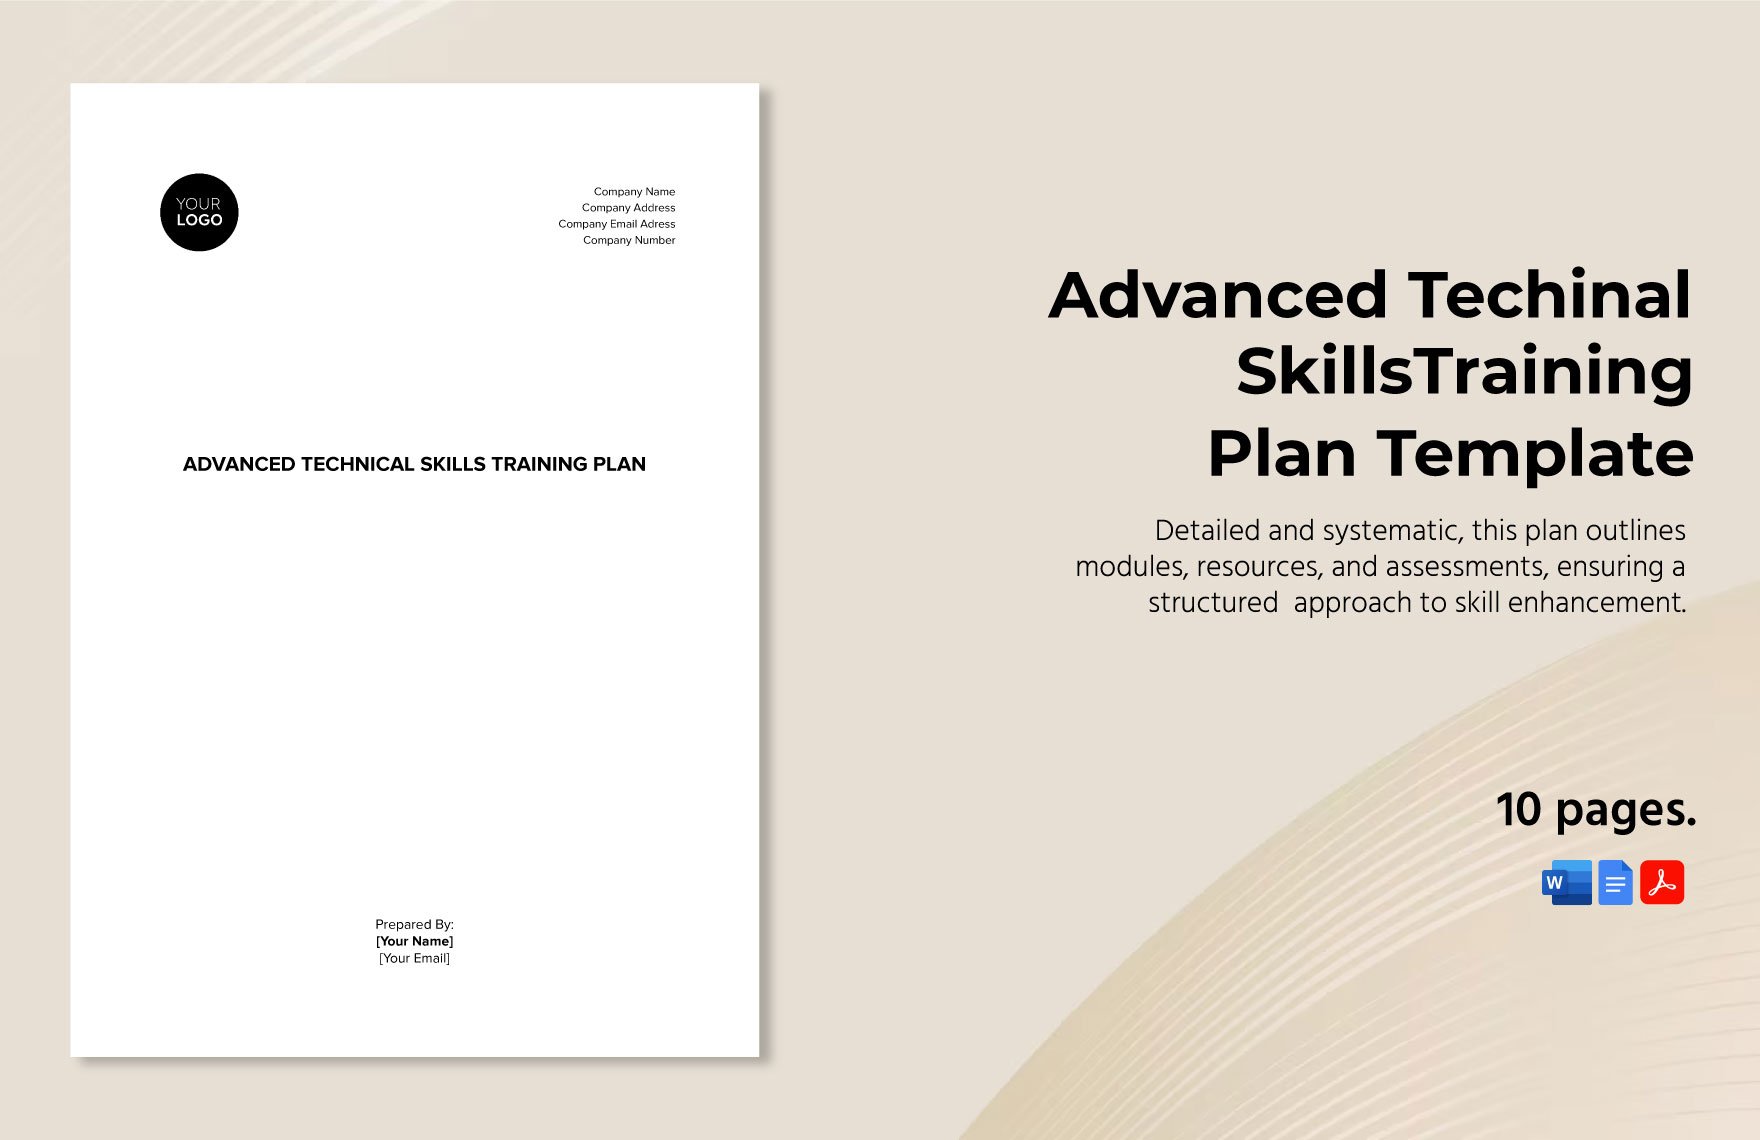 Advanced Technical Skills Training Plan HR Template